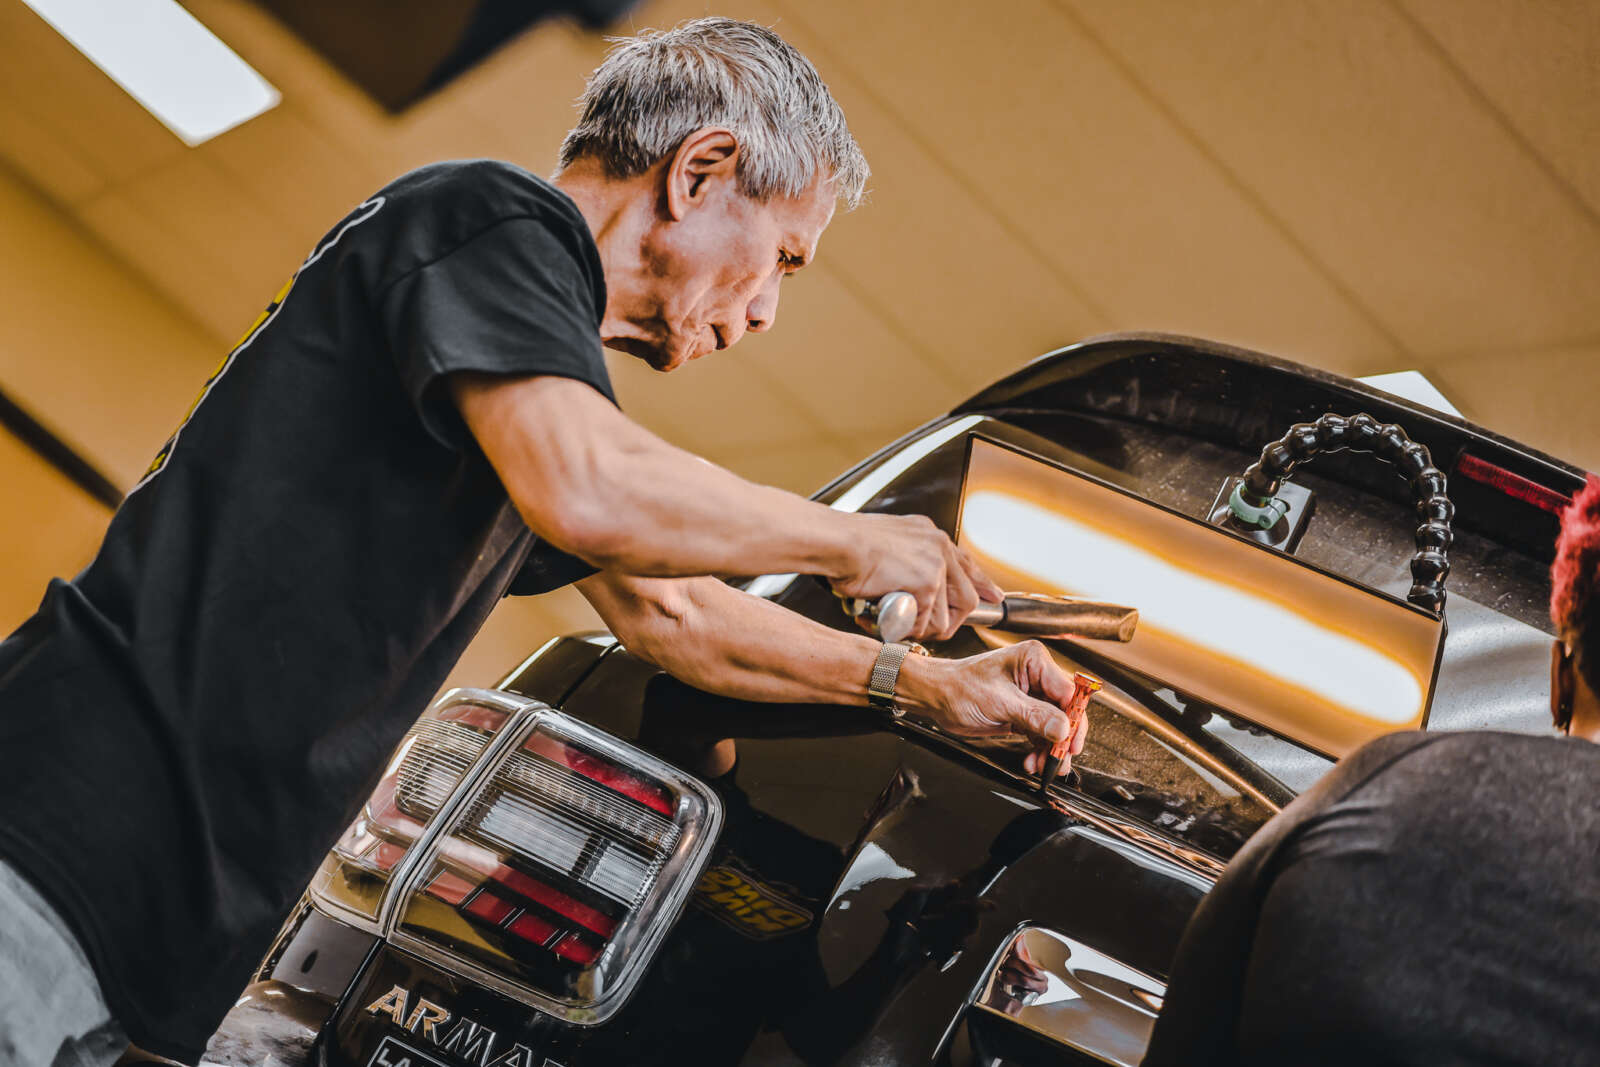 A man is receiving paintless dent repair training in a garage.